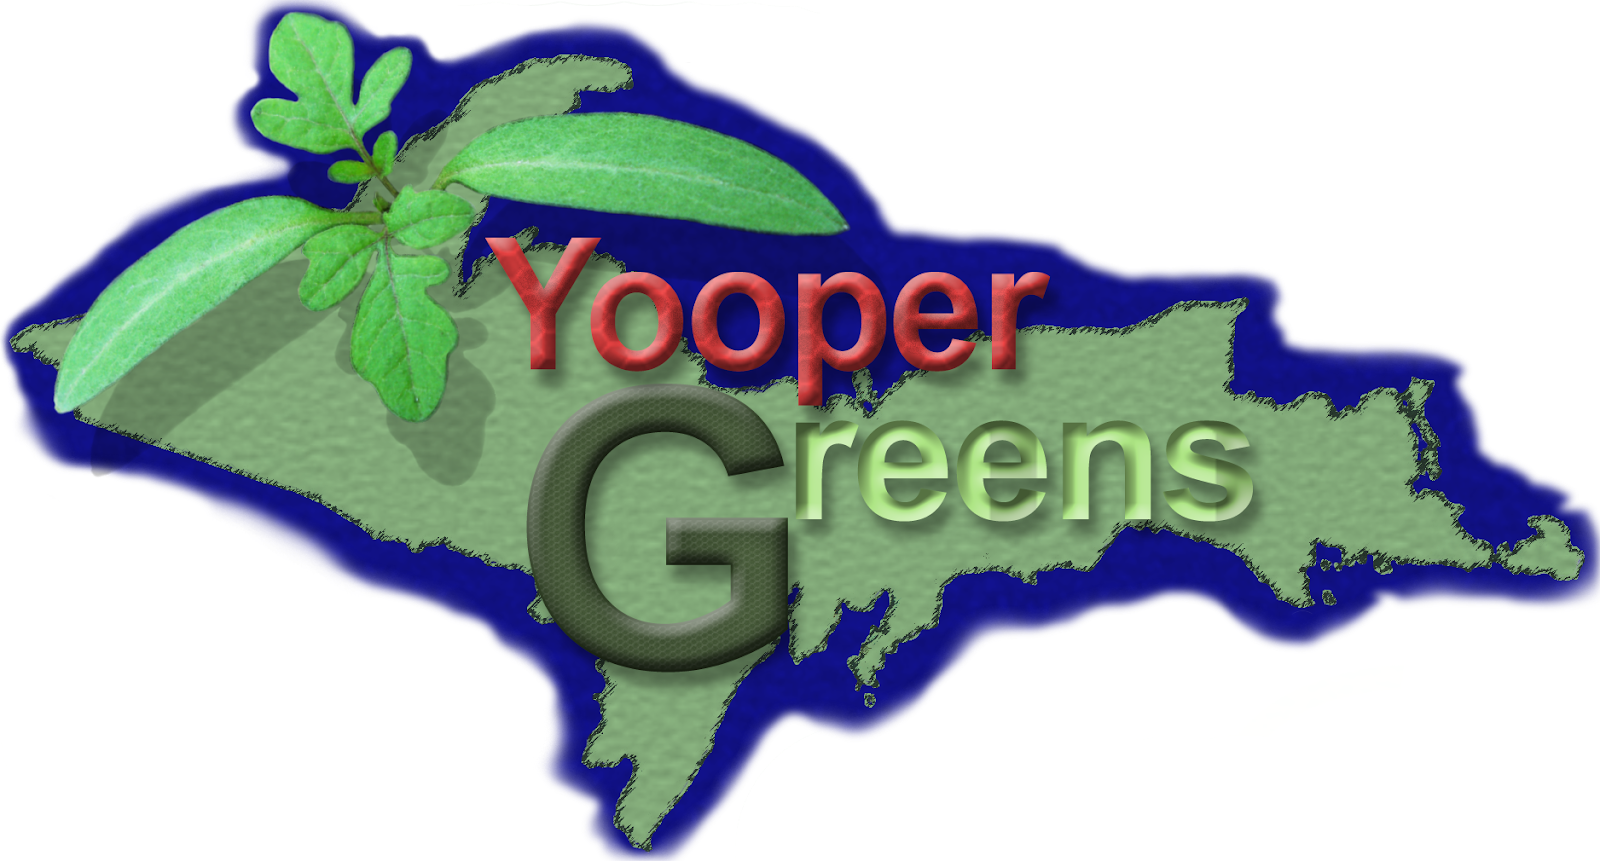 Yooper Greens